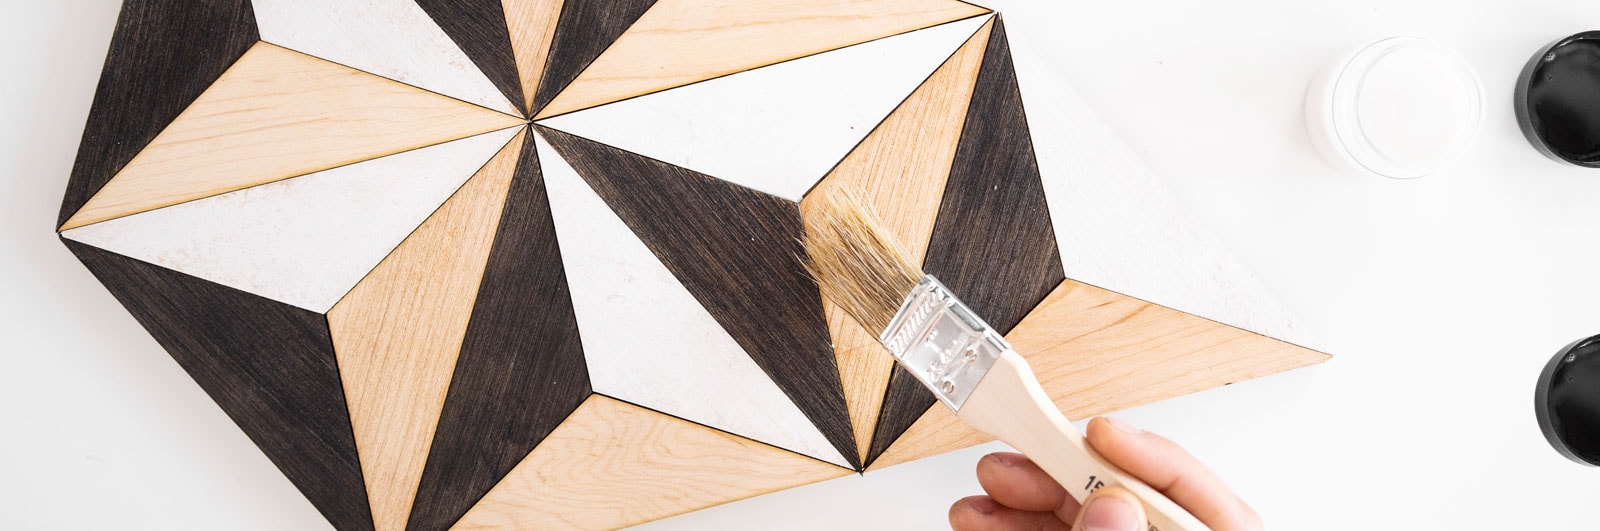 Geometric Wood Art | Nicole Sweeney | The Crafter's Box